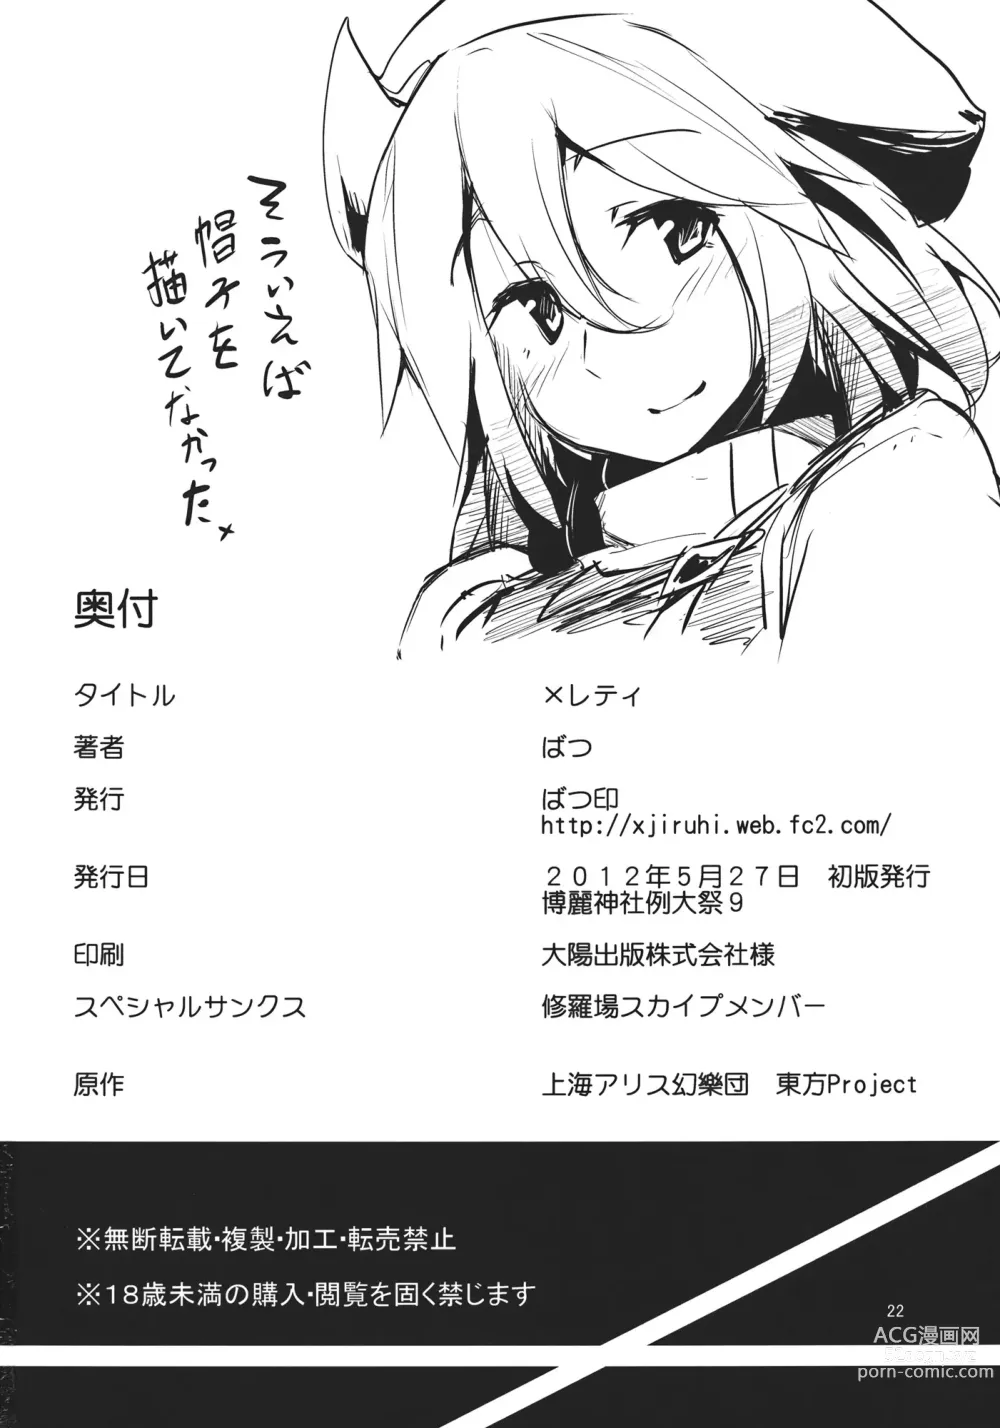 Page 22 of doujinshi ×蕾蒂